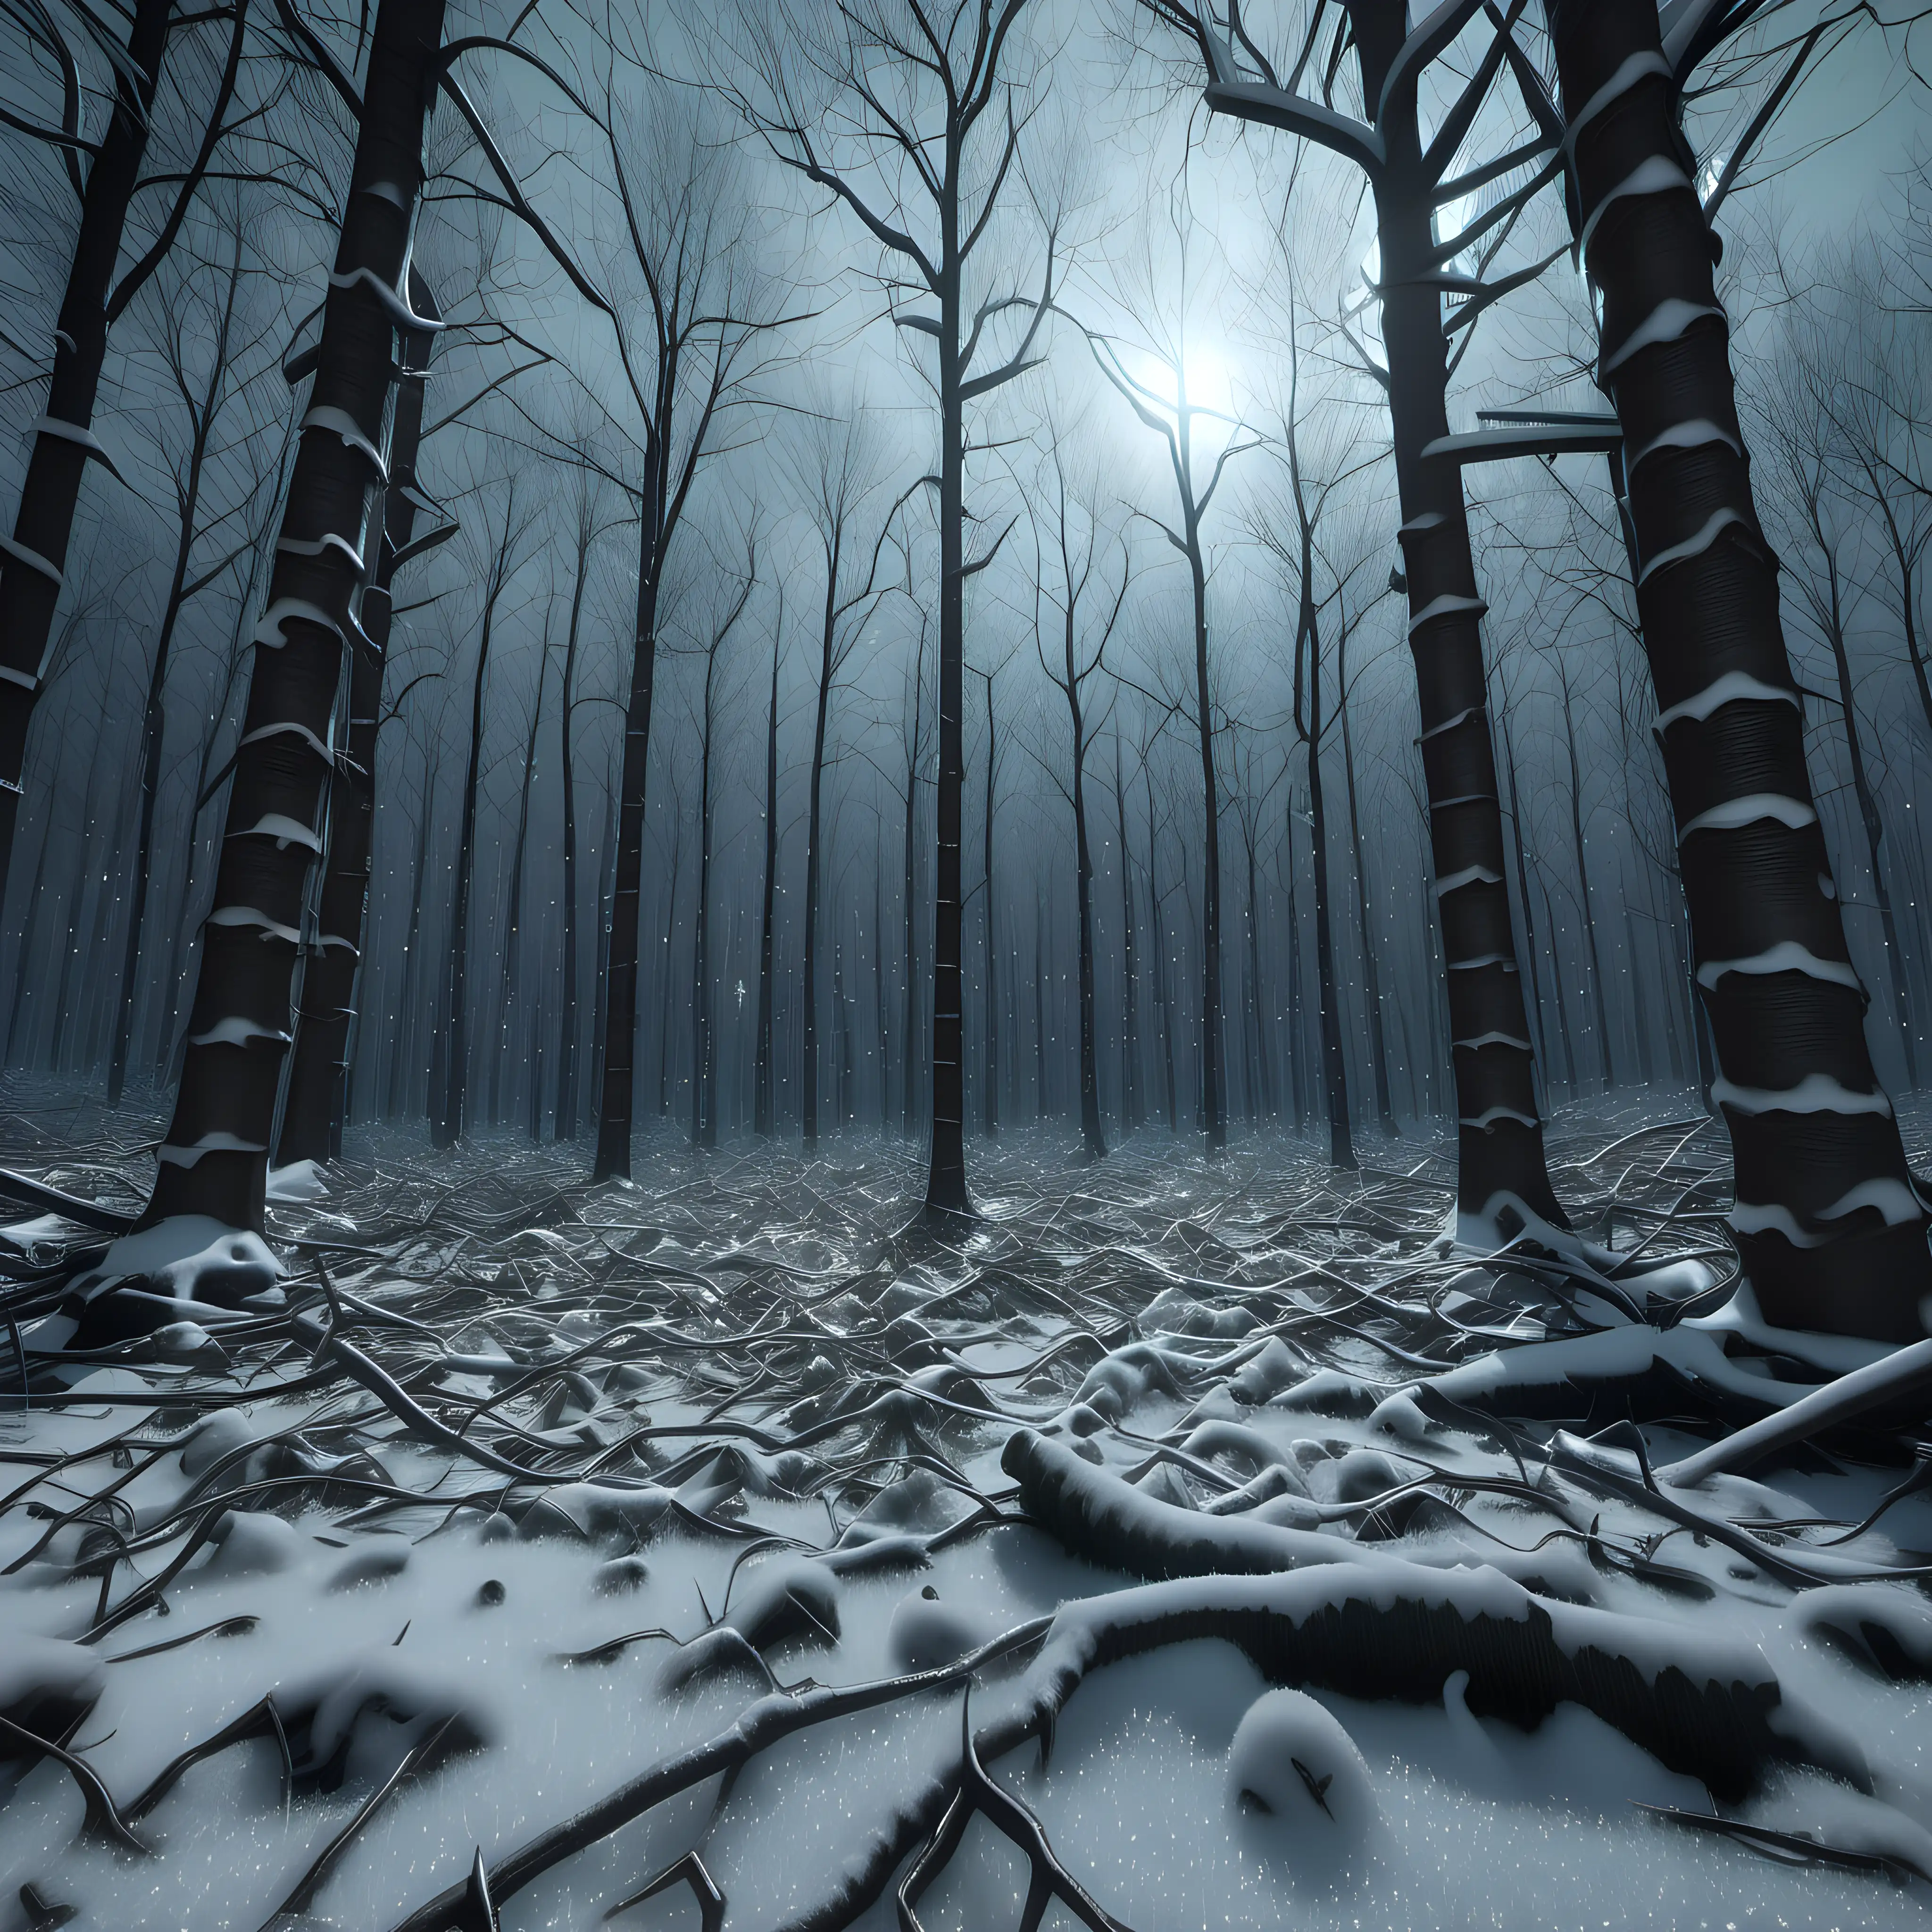 snowy forest floor, trees all over, 1080p resolution, ultra 4K, high definition, volumetric lightning